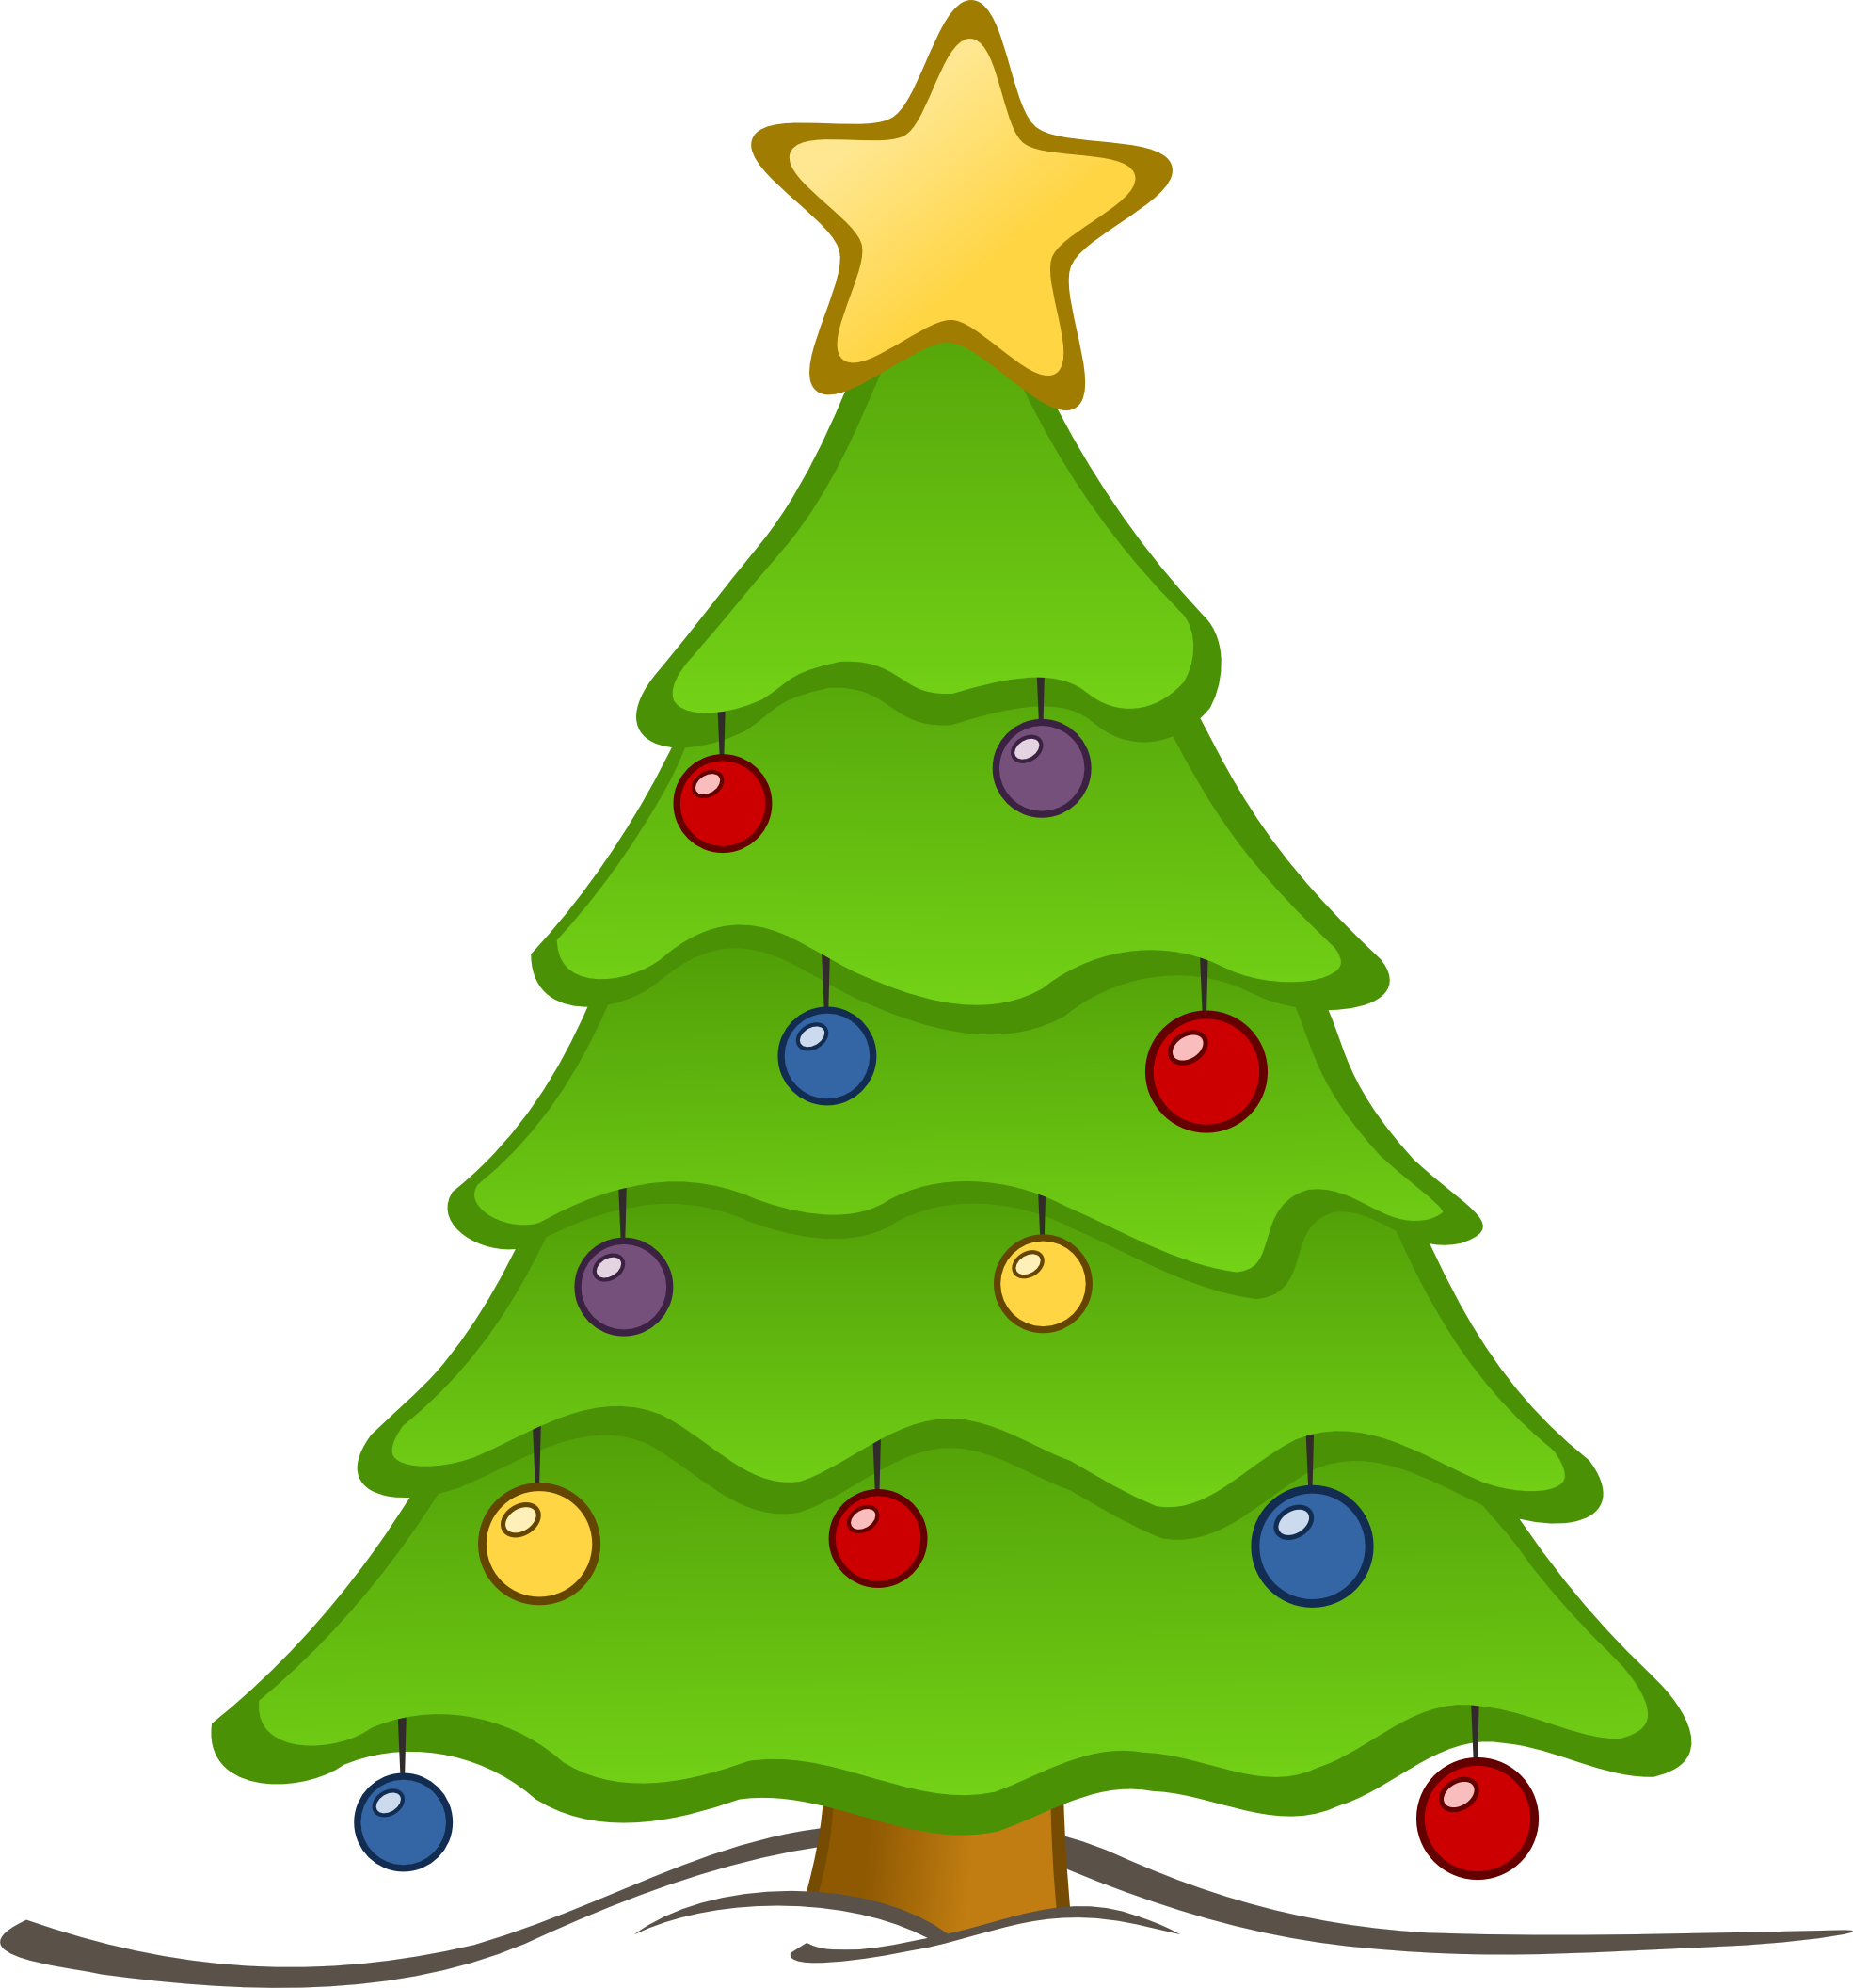 Christmas Clipart Trees snowflakes Cupcake Gift box Xmas Trees Clip arts Ornaments christmas ornaments 0683